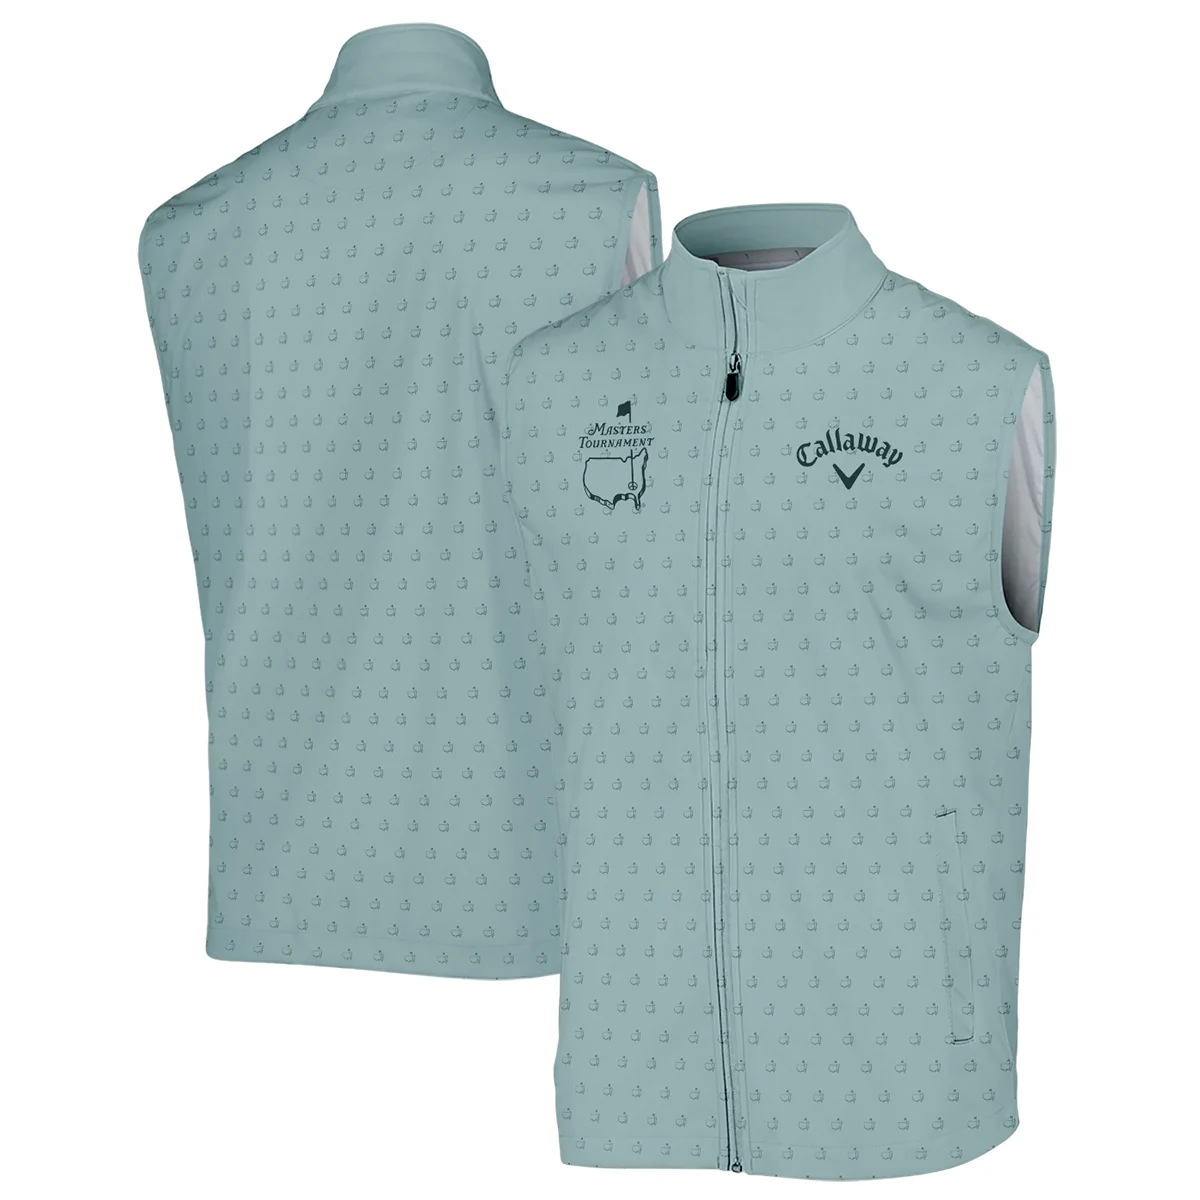 Golf Pattern Masters Tournament Callaway Sleeveless Jacket Cyan Pattern All Over Print Sleeveless Jacket